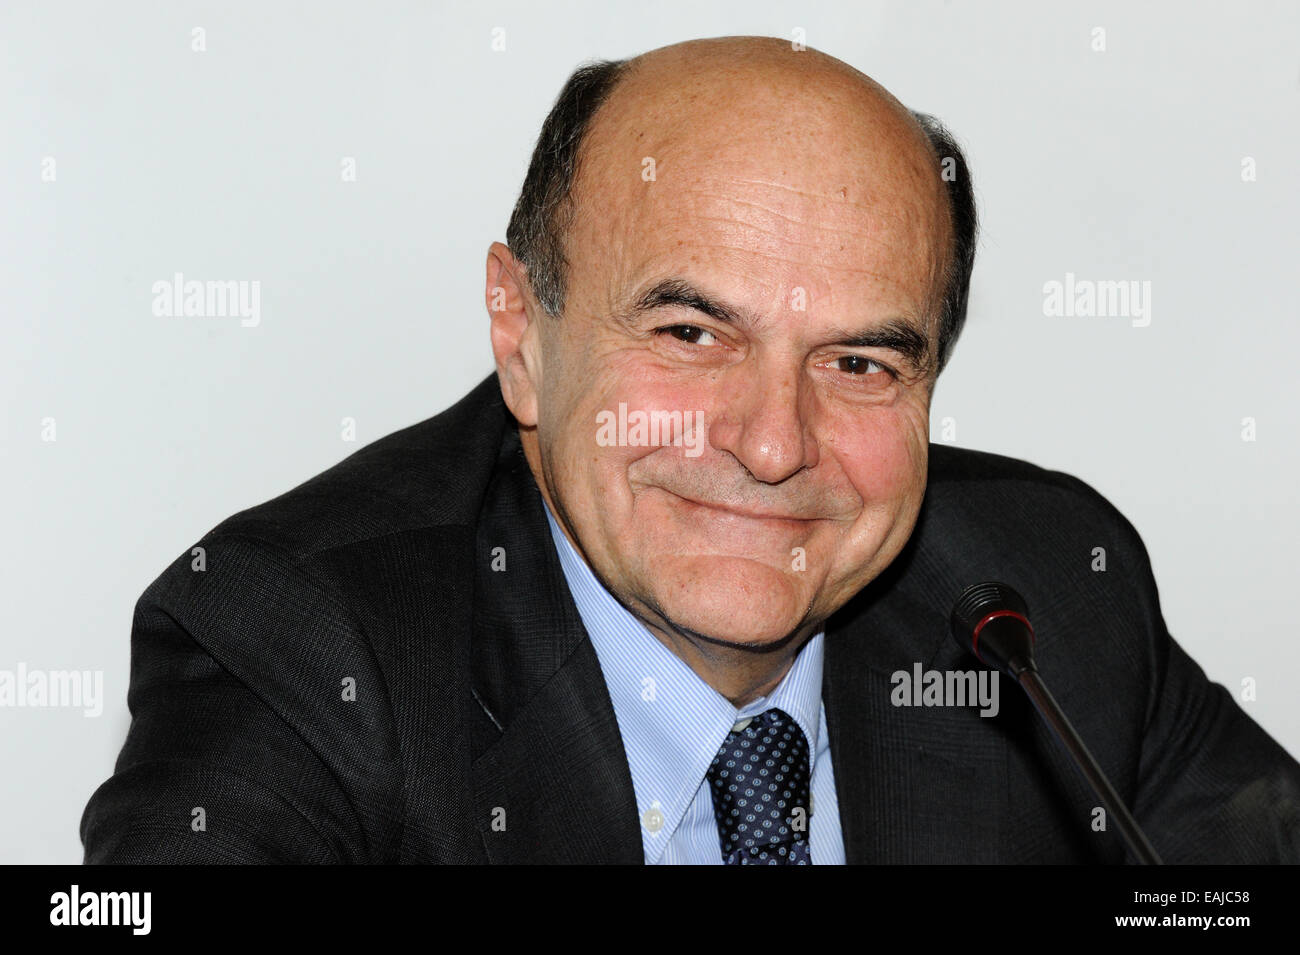 Pier Luigi Bersani, Partito Democratico (Parti démocratique). Banque D'Images